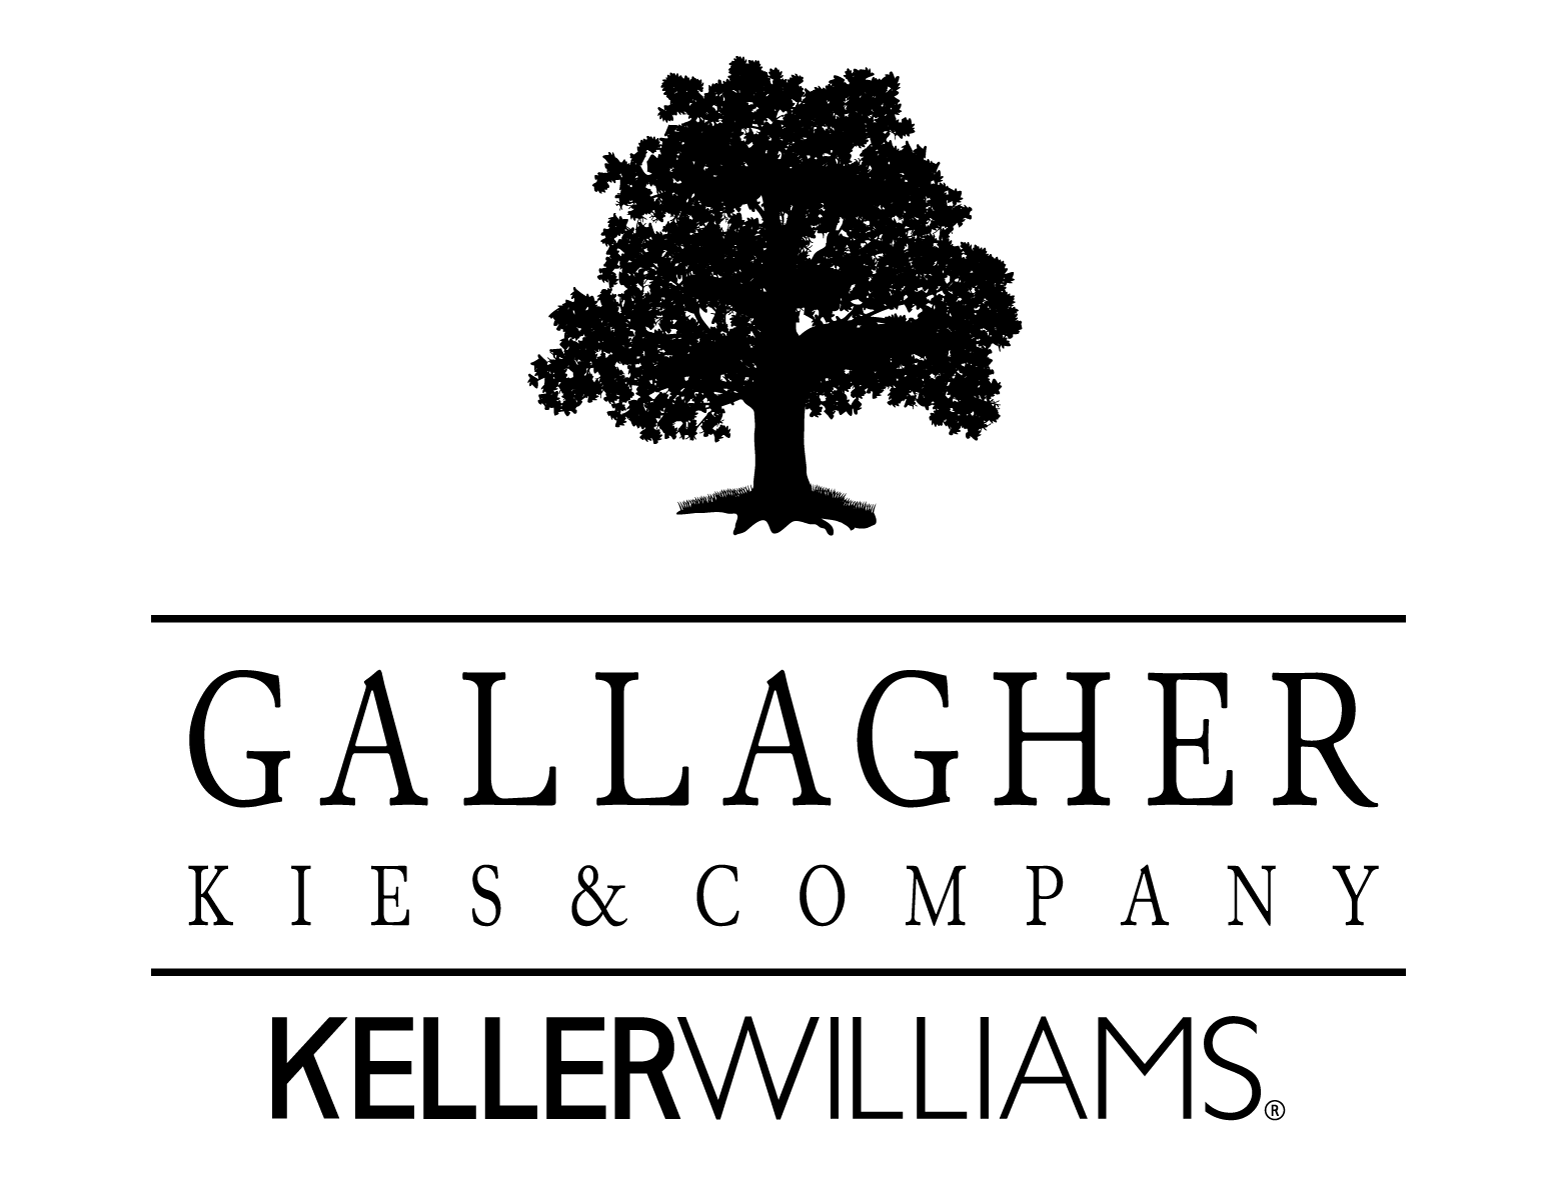 New Gallagher Logo - Gallagher Kies Kw Logo New Black Kies & Company